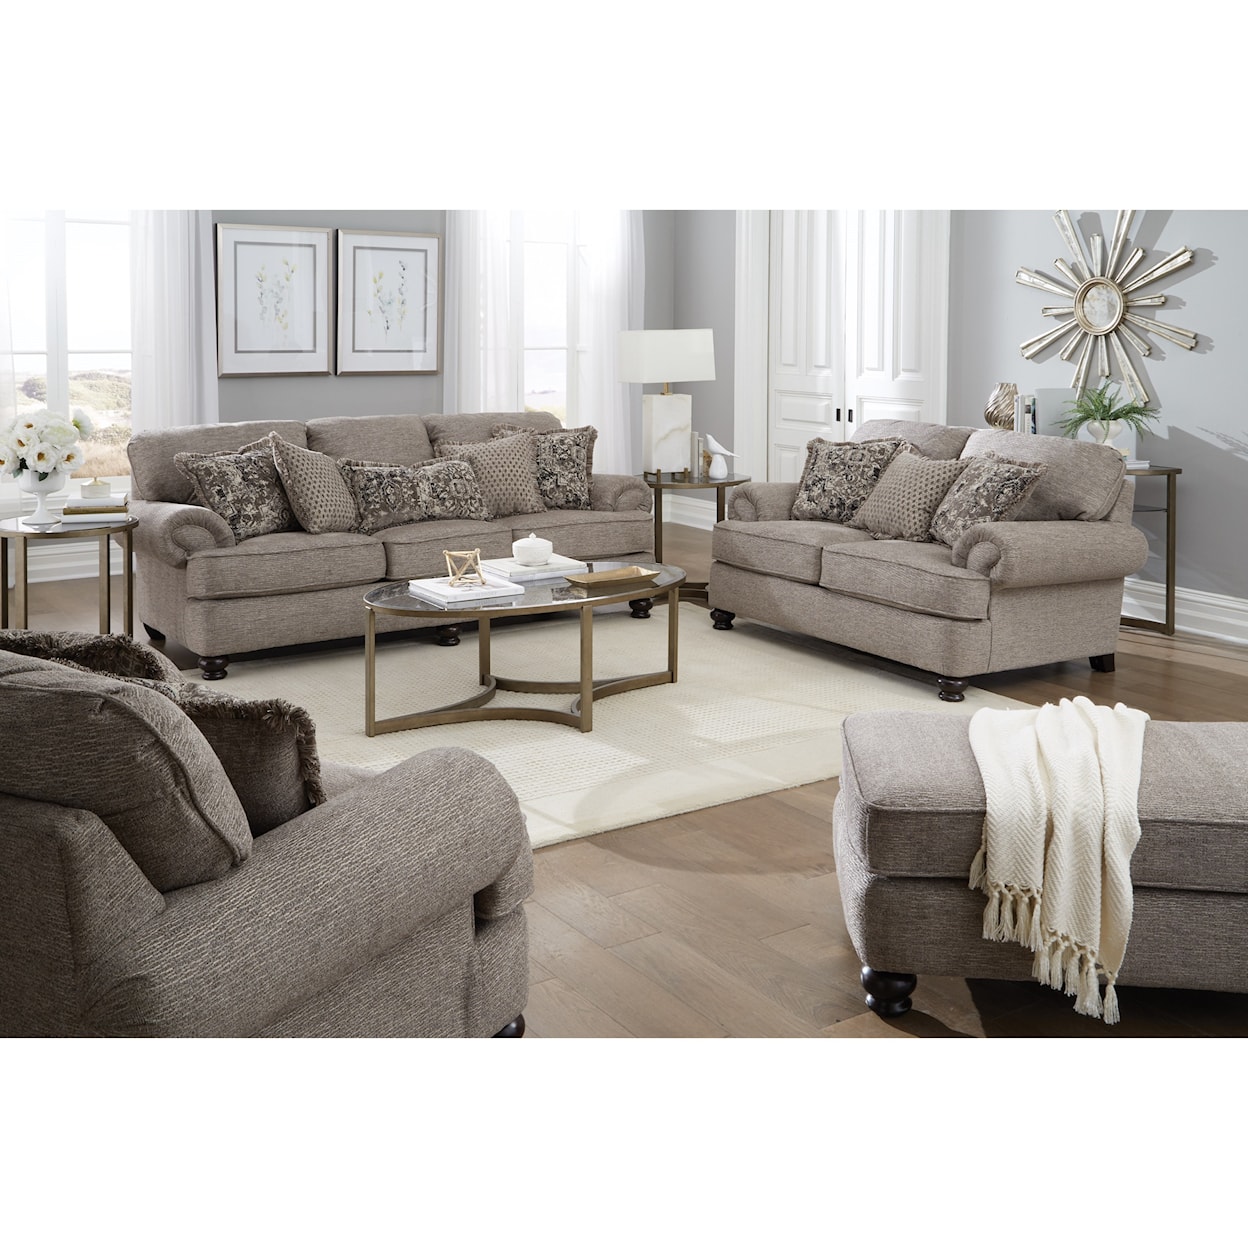 Jackson Furniture 4447 Freemont Sofa